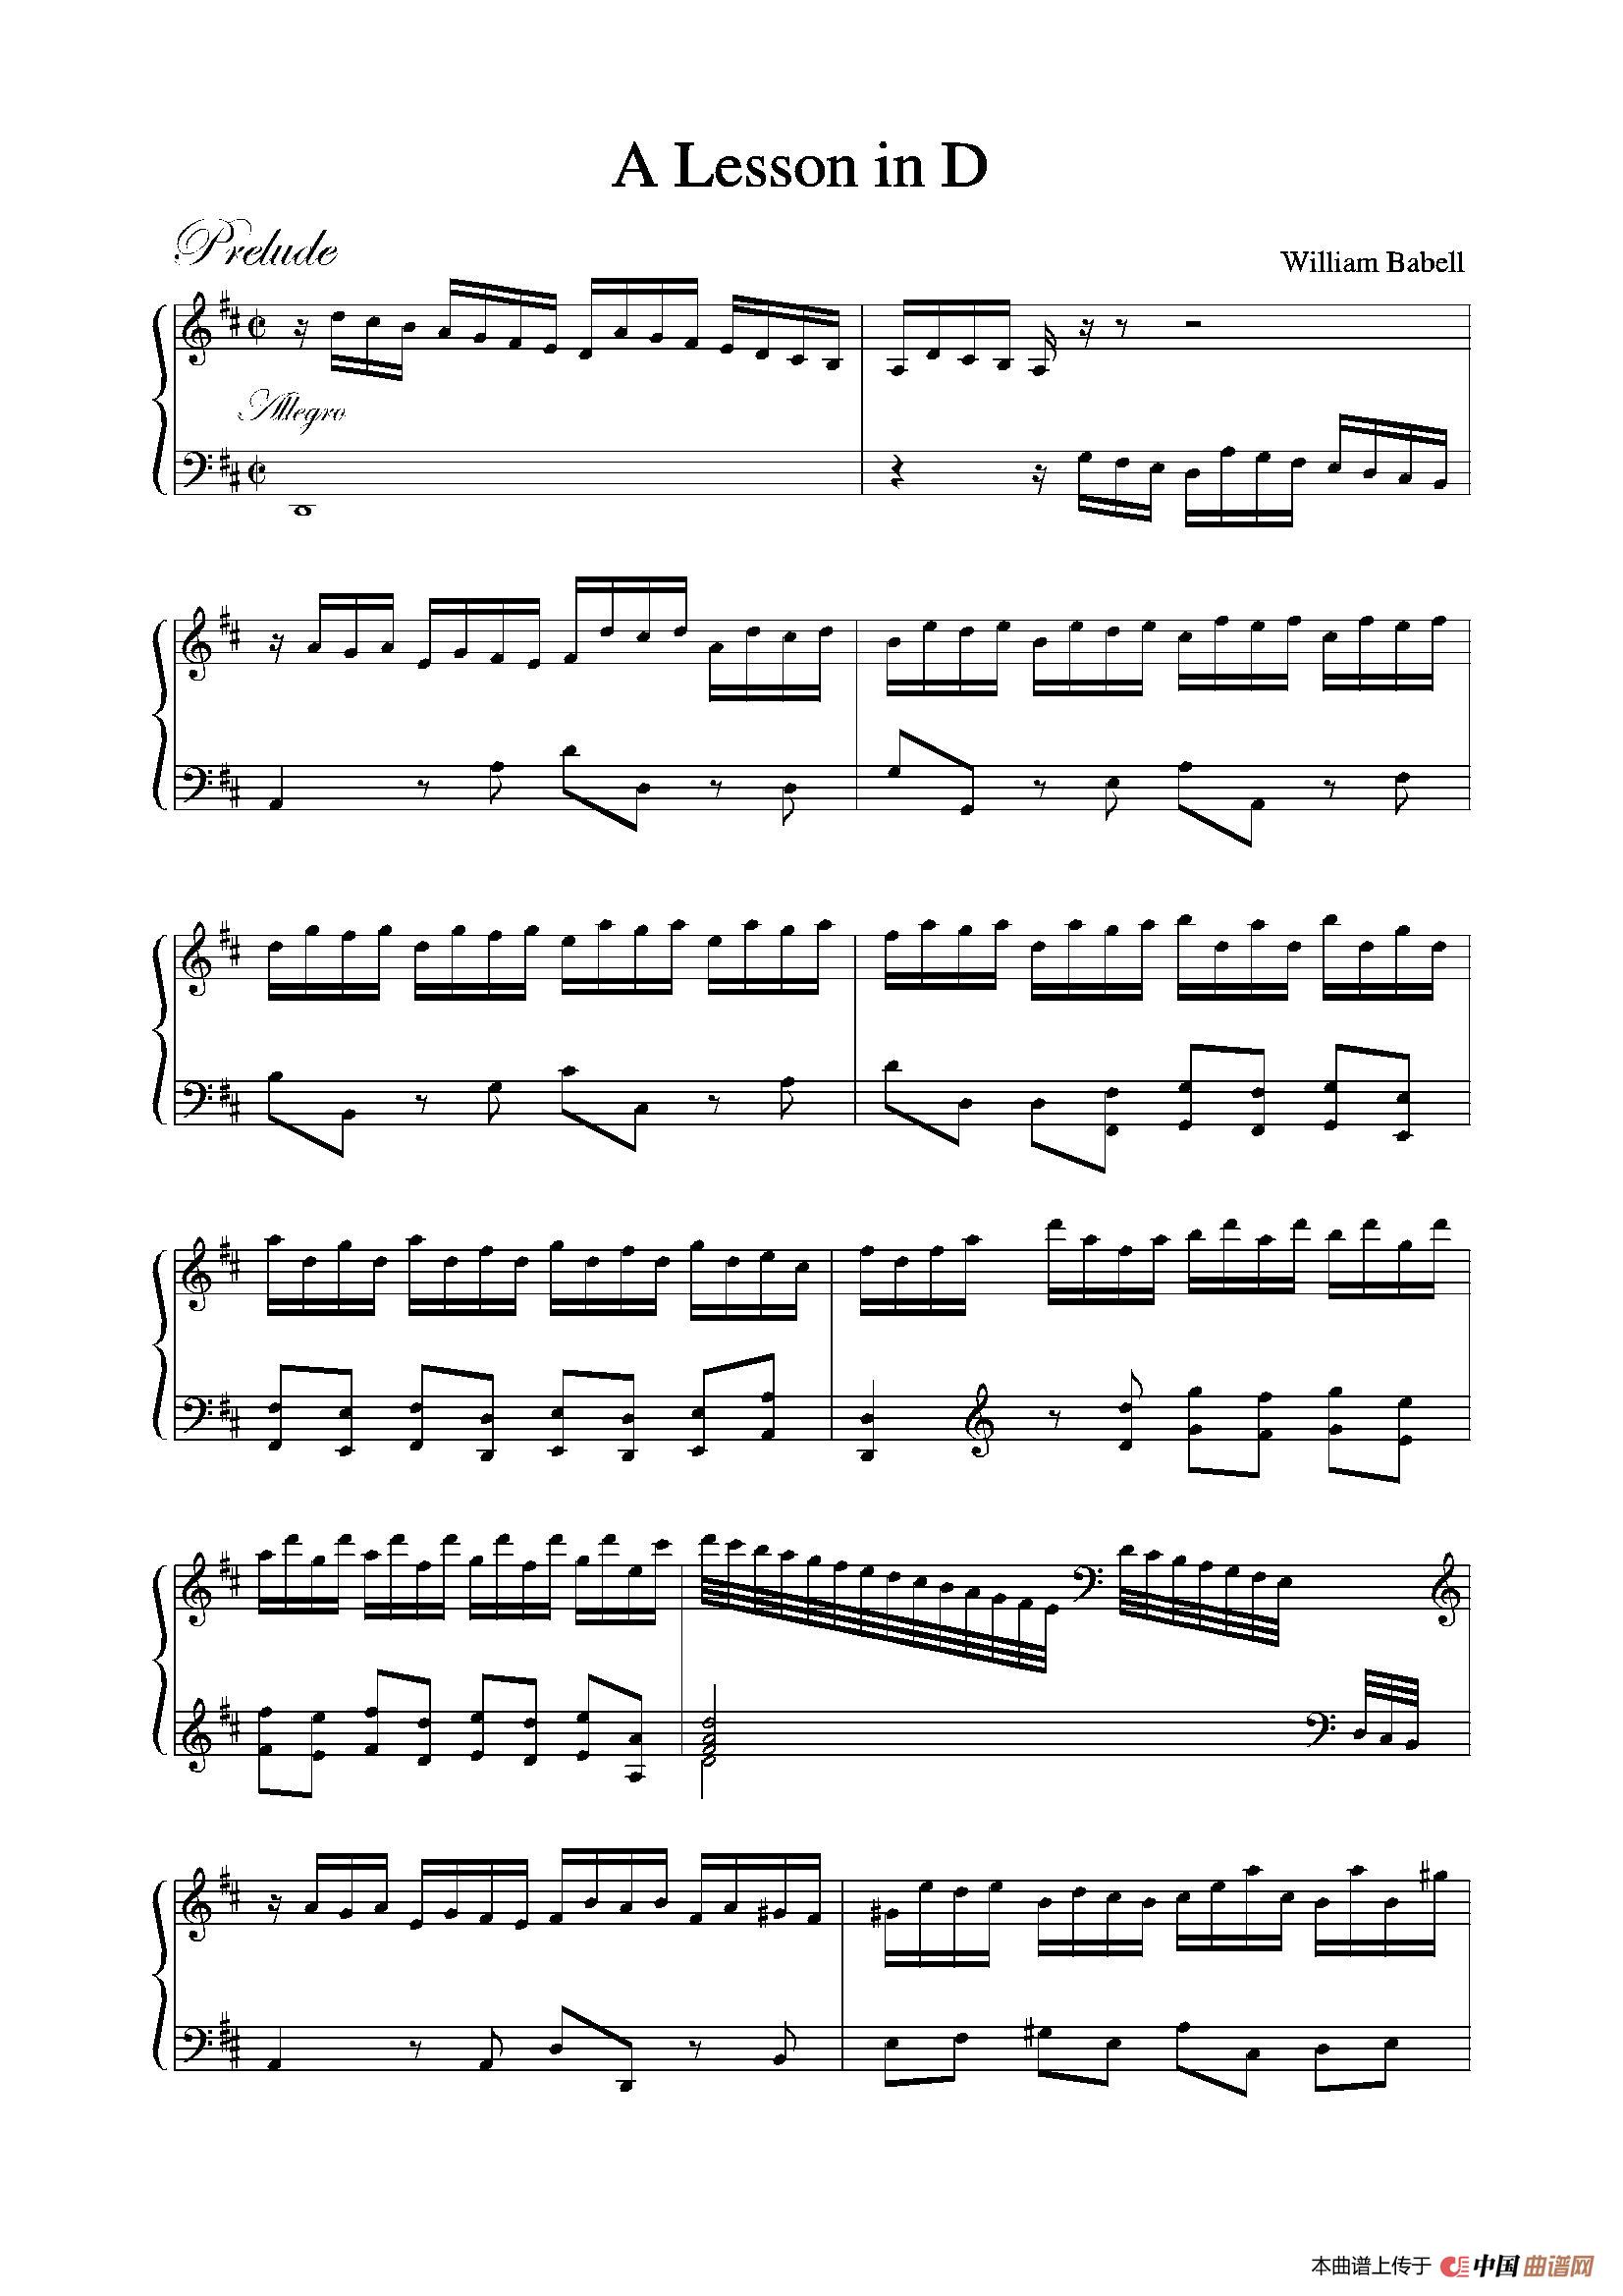 《A Lesson in D》钢琴曲谱图分享